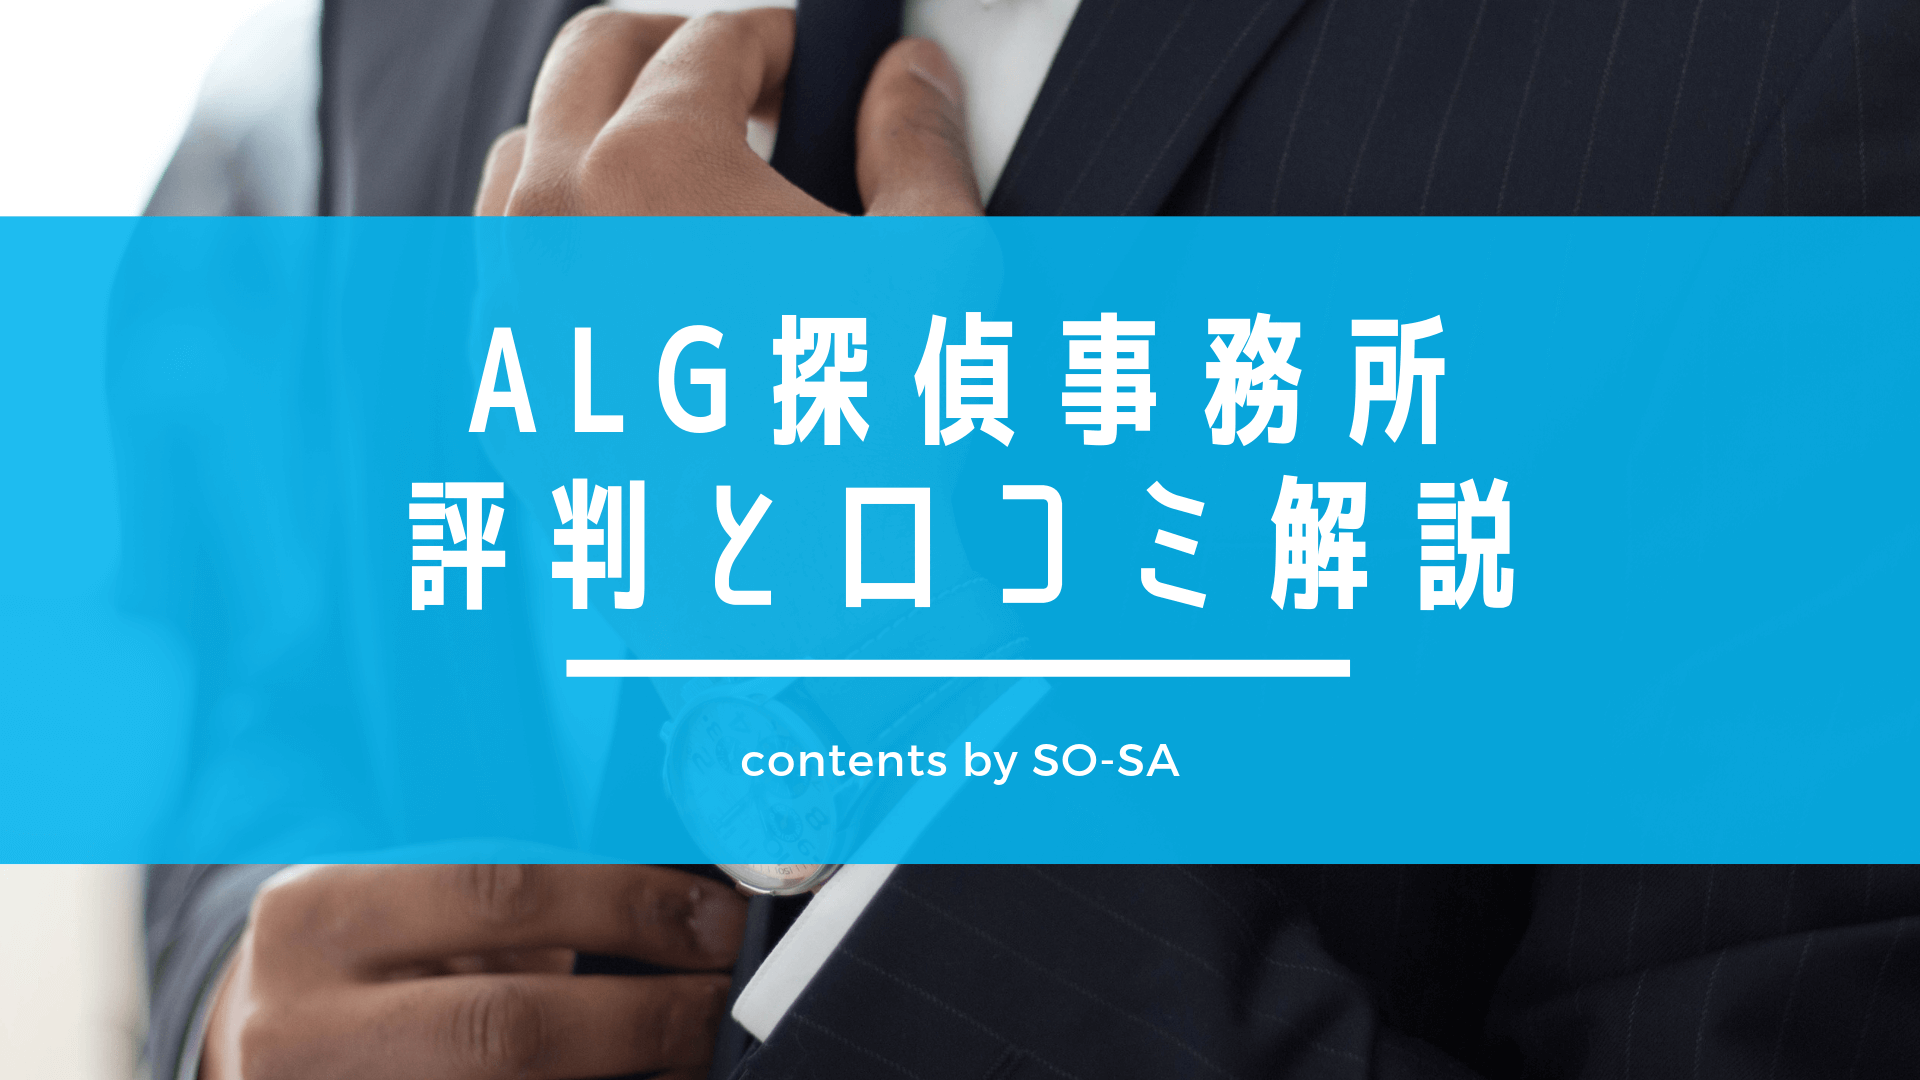 ALG探偵事務所評判と口コミ解説 (1)